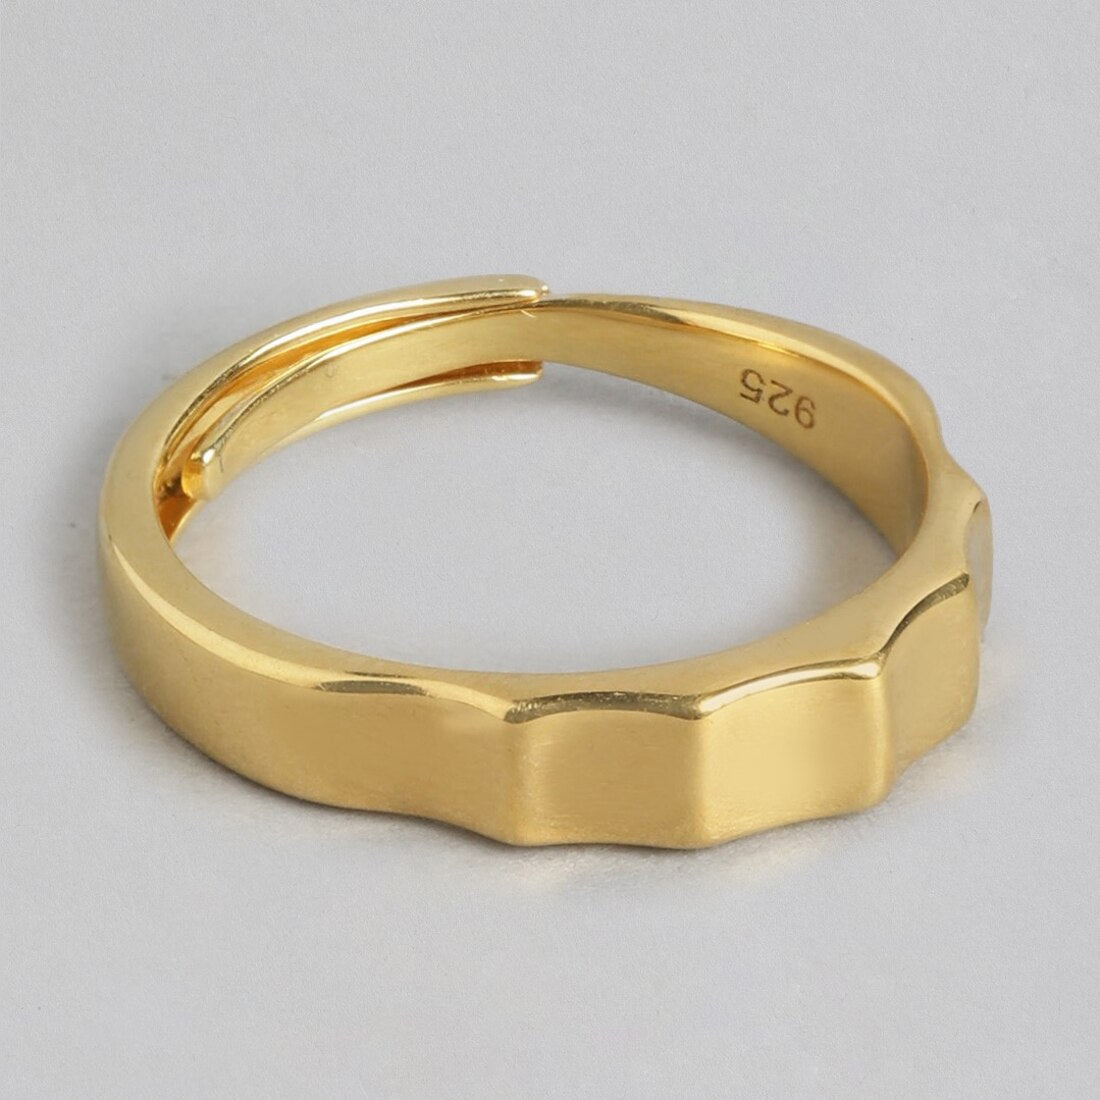 Golden Majesty Gold-Plated 925 Sterling Silver Ring for Him (Adjustable)